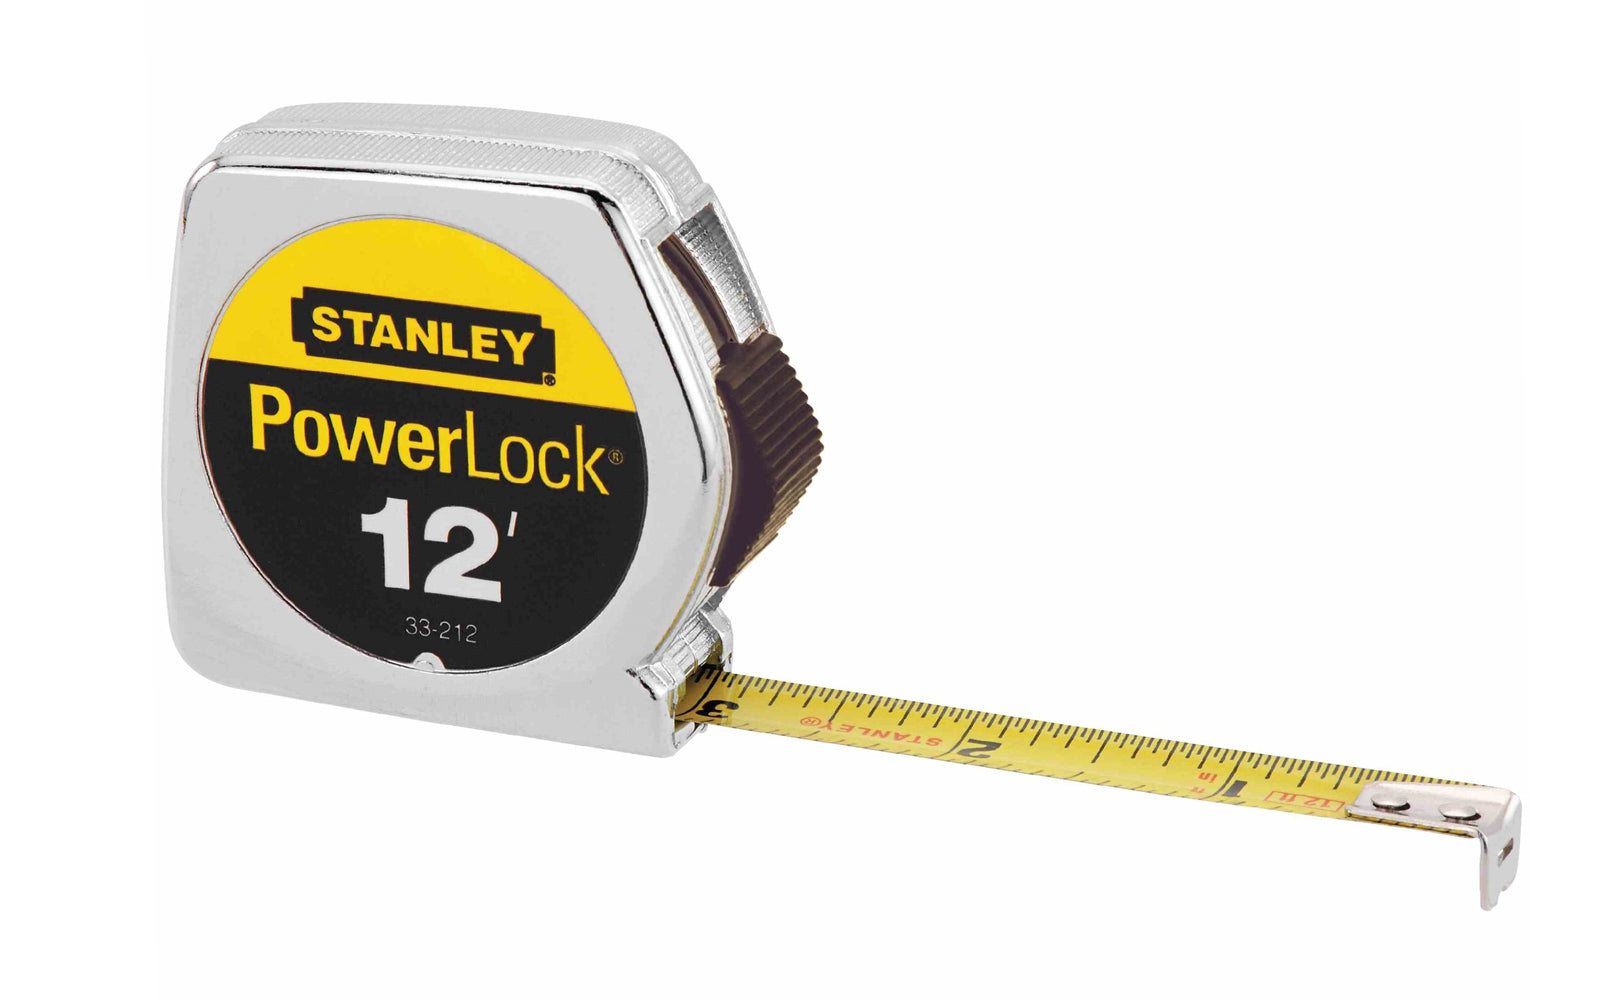 Stanley Powerlock 12' Tape Measure ~ 33-212 - Made in USA